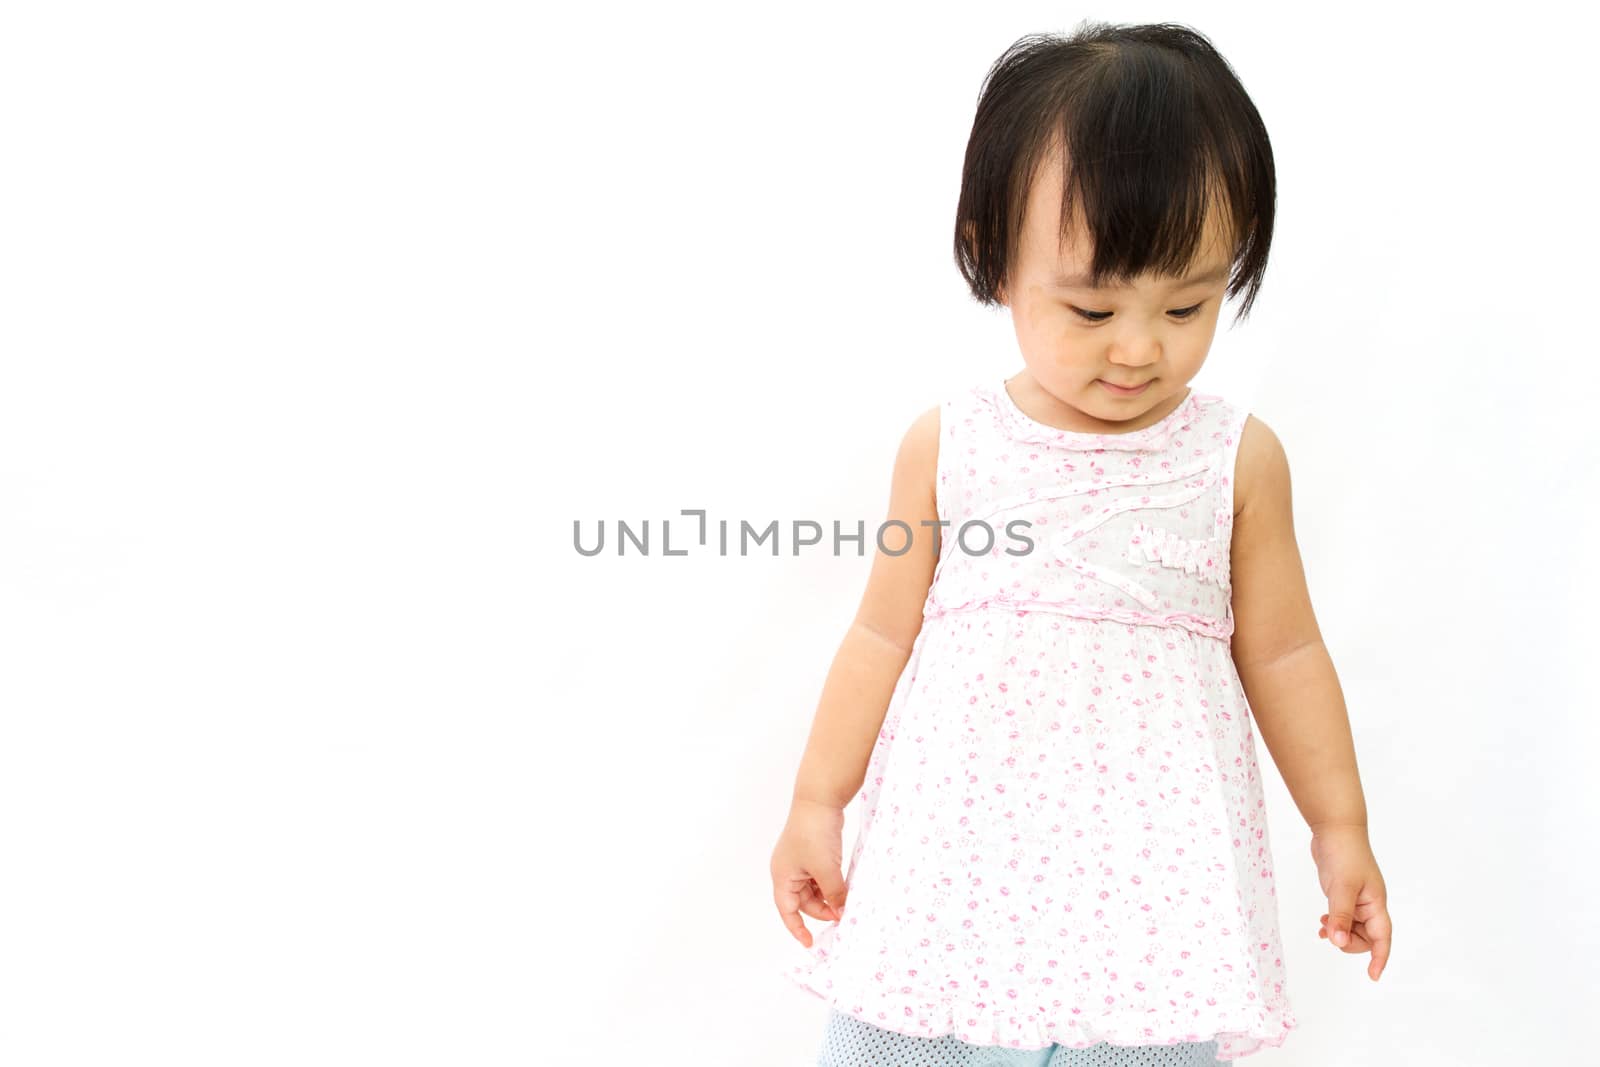 Chinese Little Girl Looks down for a portrait in studio by kiankhoon